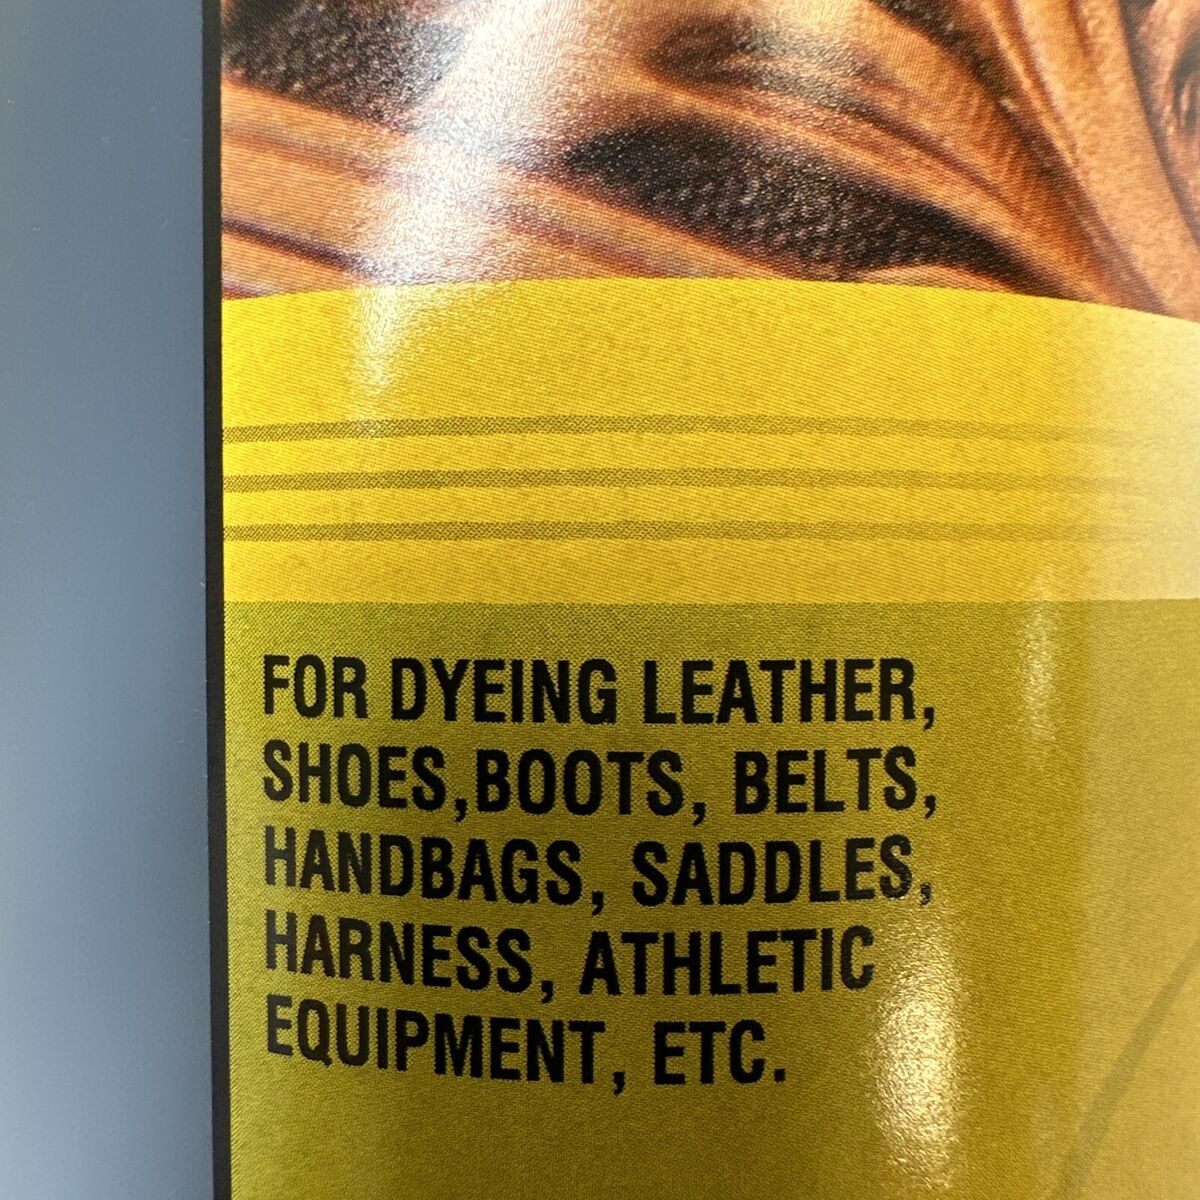 Fiebing's Leather Dye - 32 oz (1 Quart), Yellow